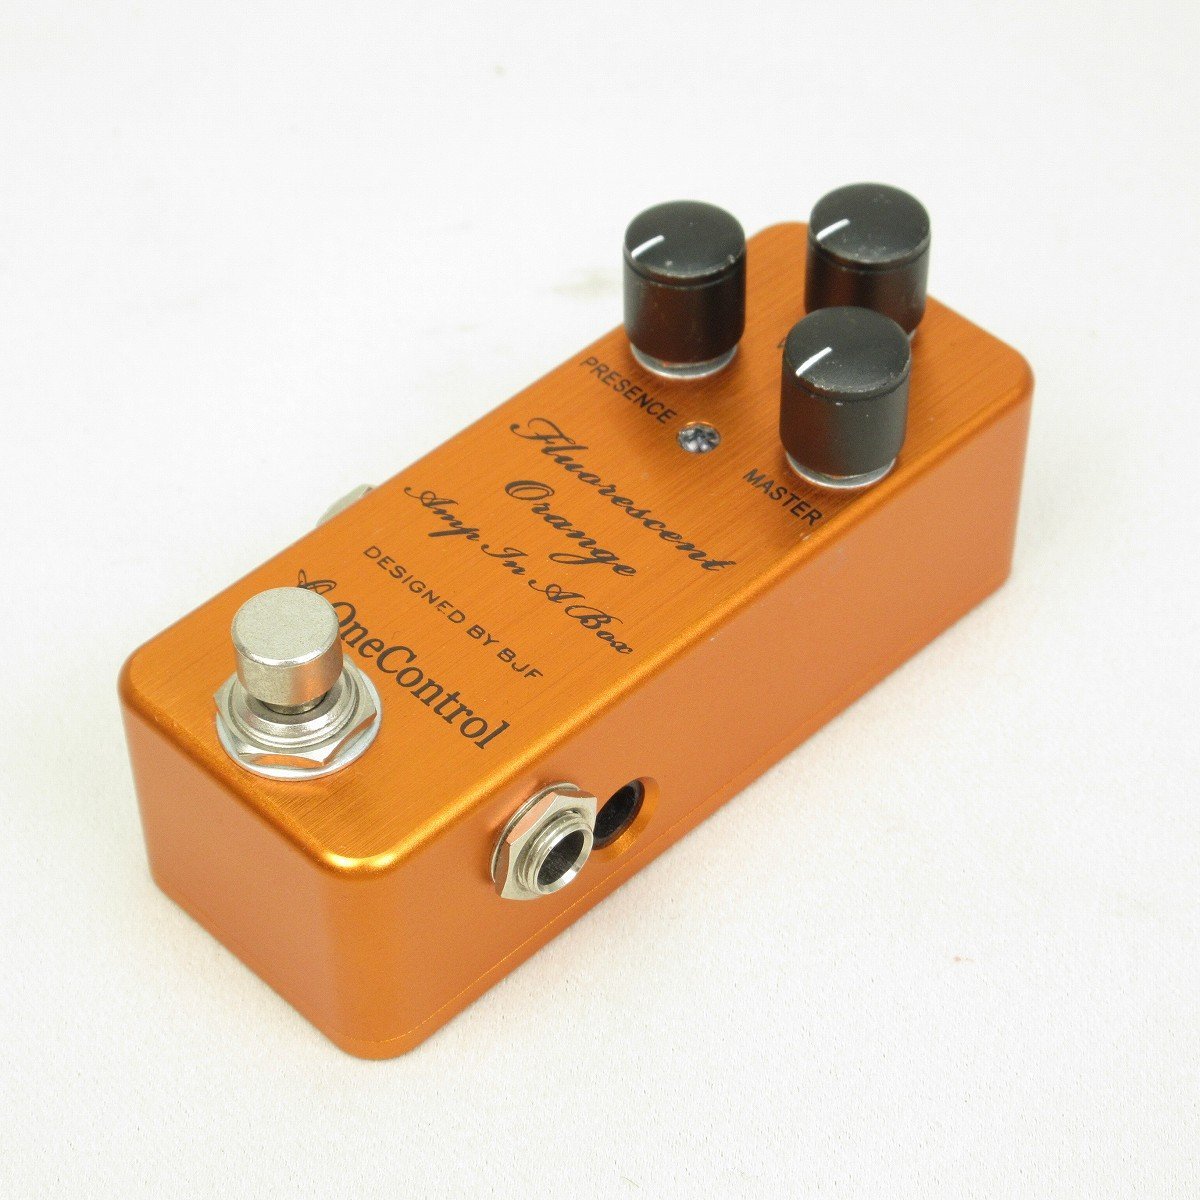 ONE CONTROL Fluorescent Orange Amp In A Box オーバードライブ ...